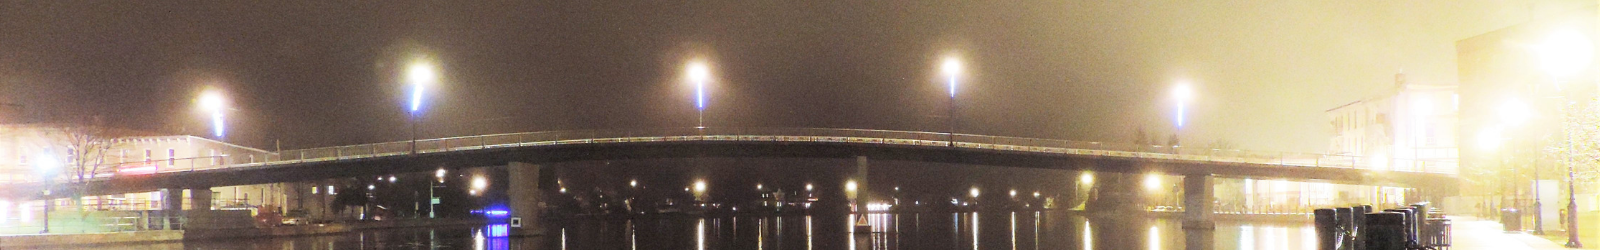 Foggy Bridge in Campbellford